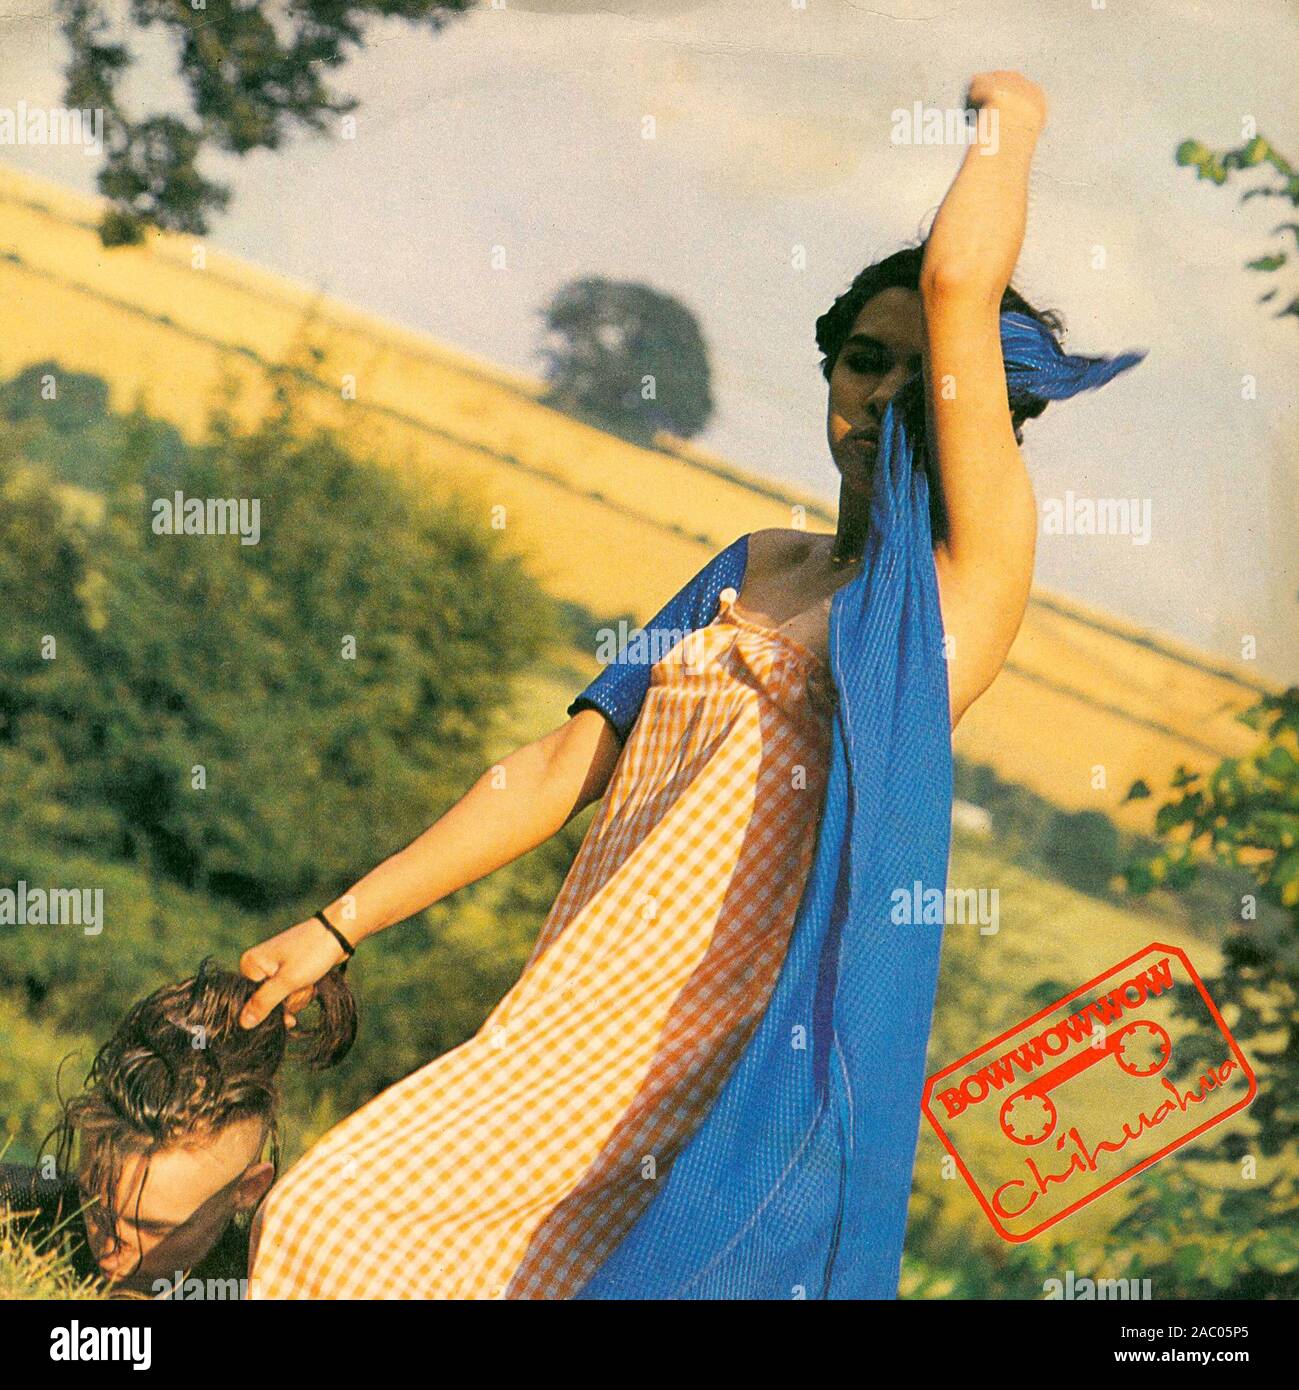 Bow Wow Wo - Chihuahua - Vintage vinyl album cover Stock Photo - Alamy